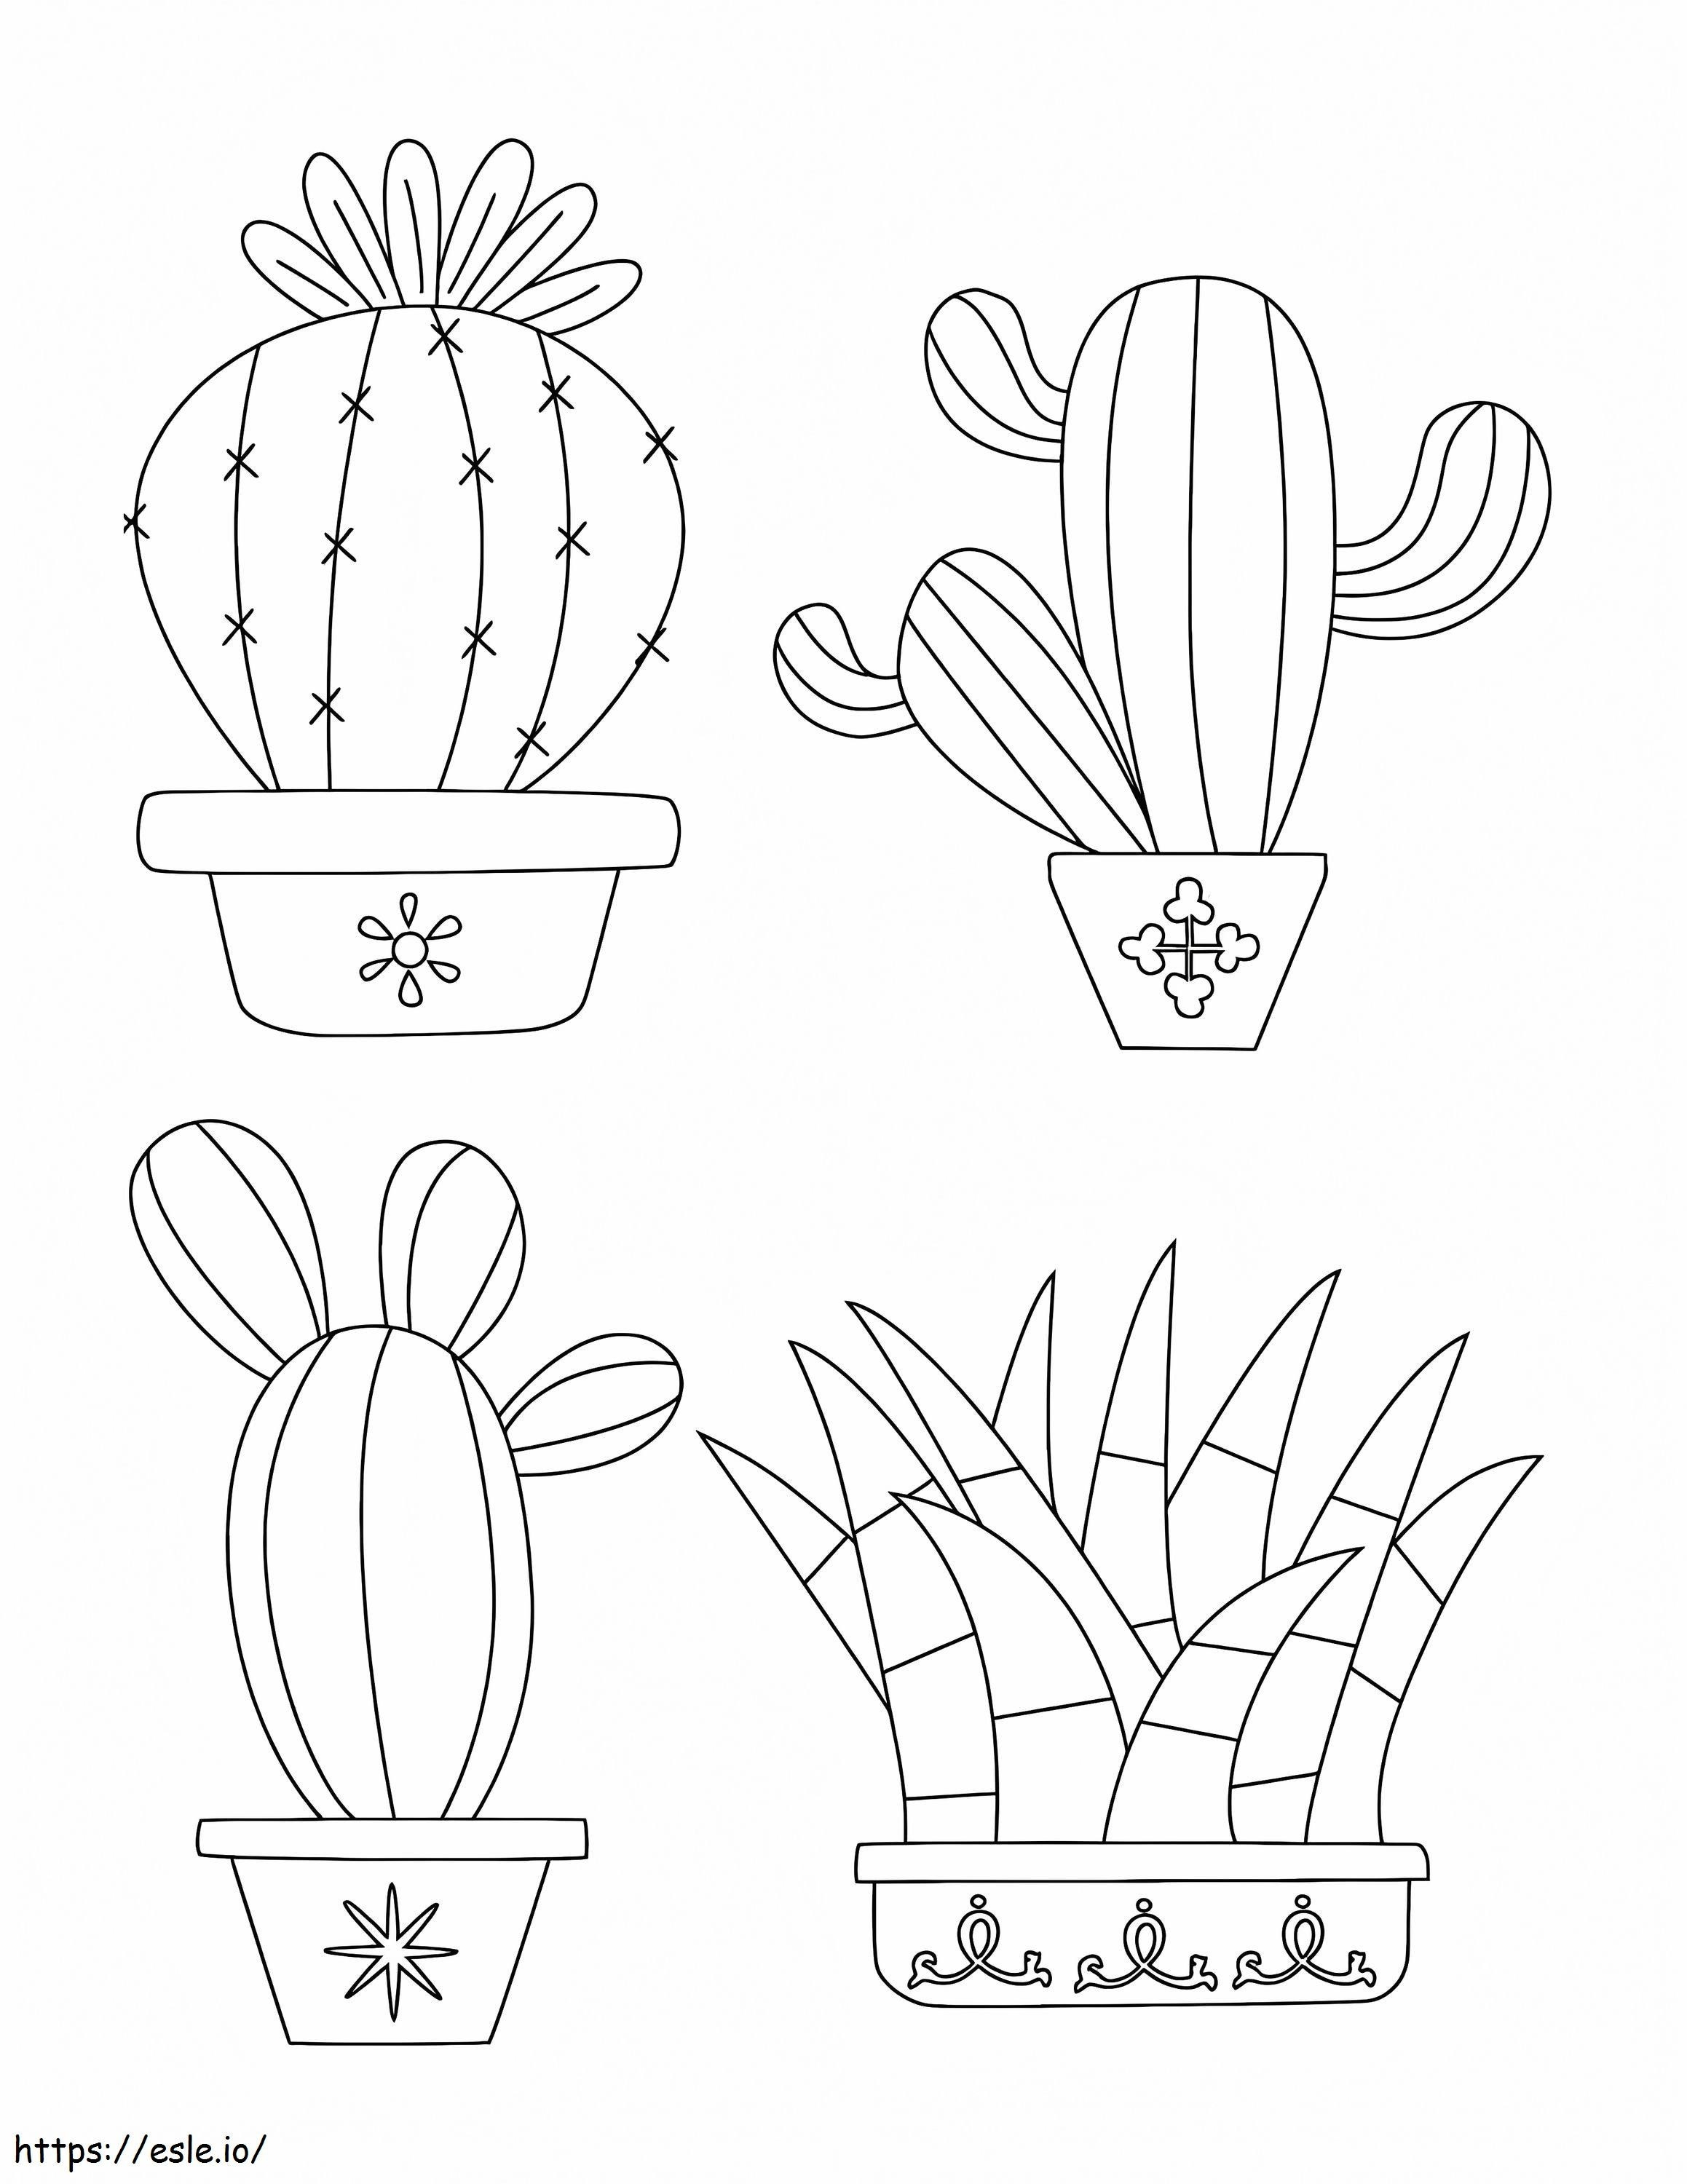 Basic Four Pot Cactus coloring page